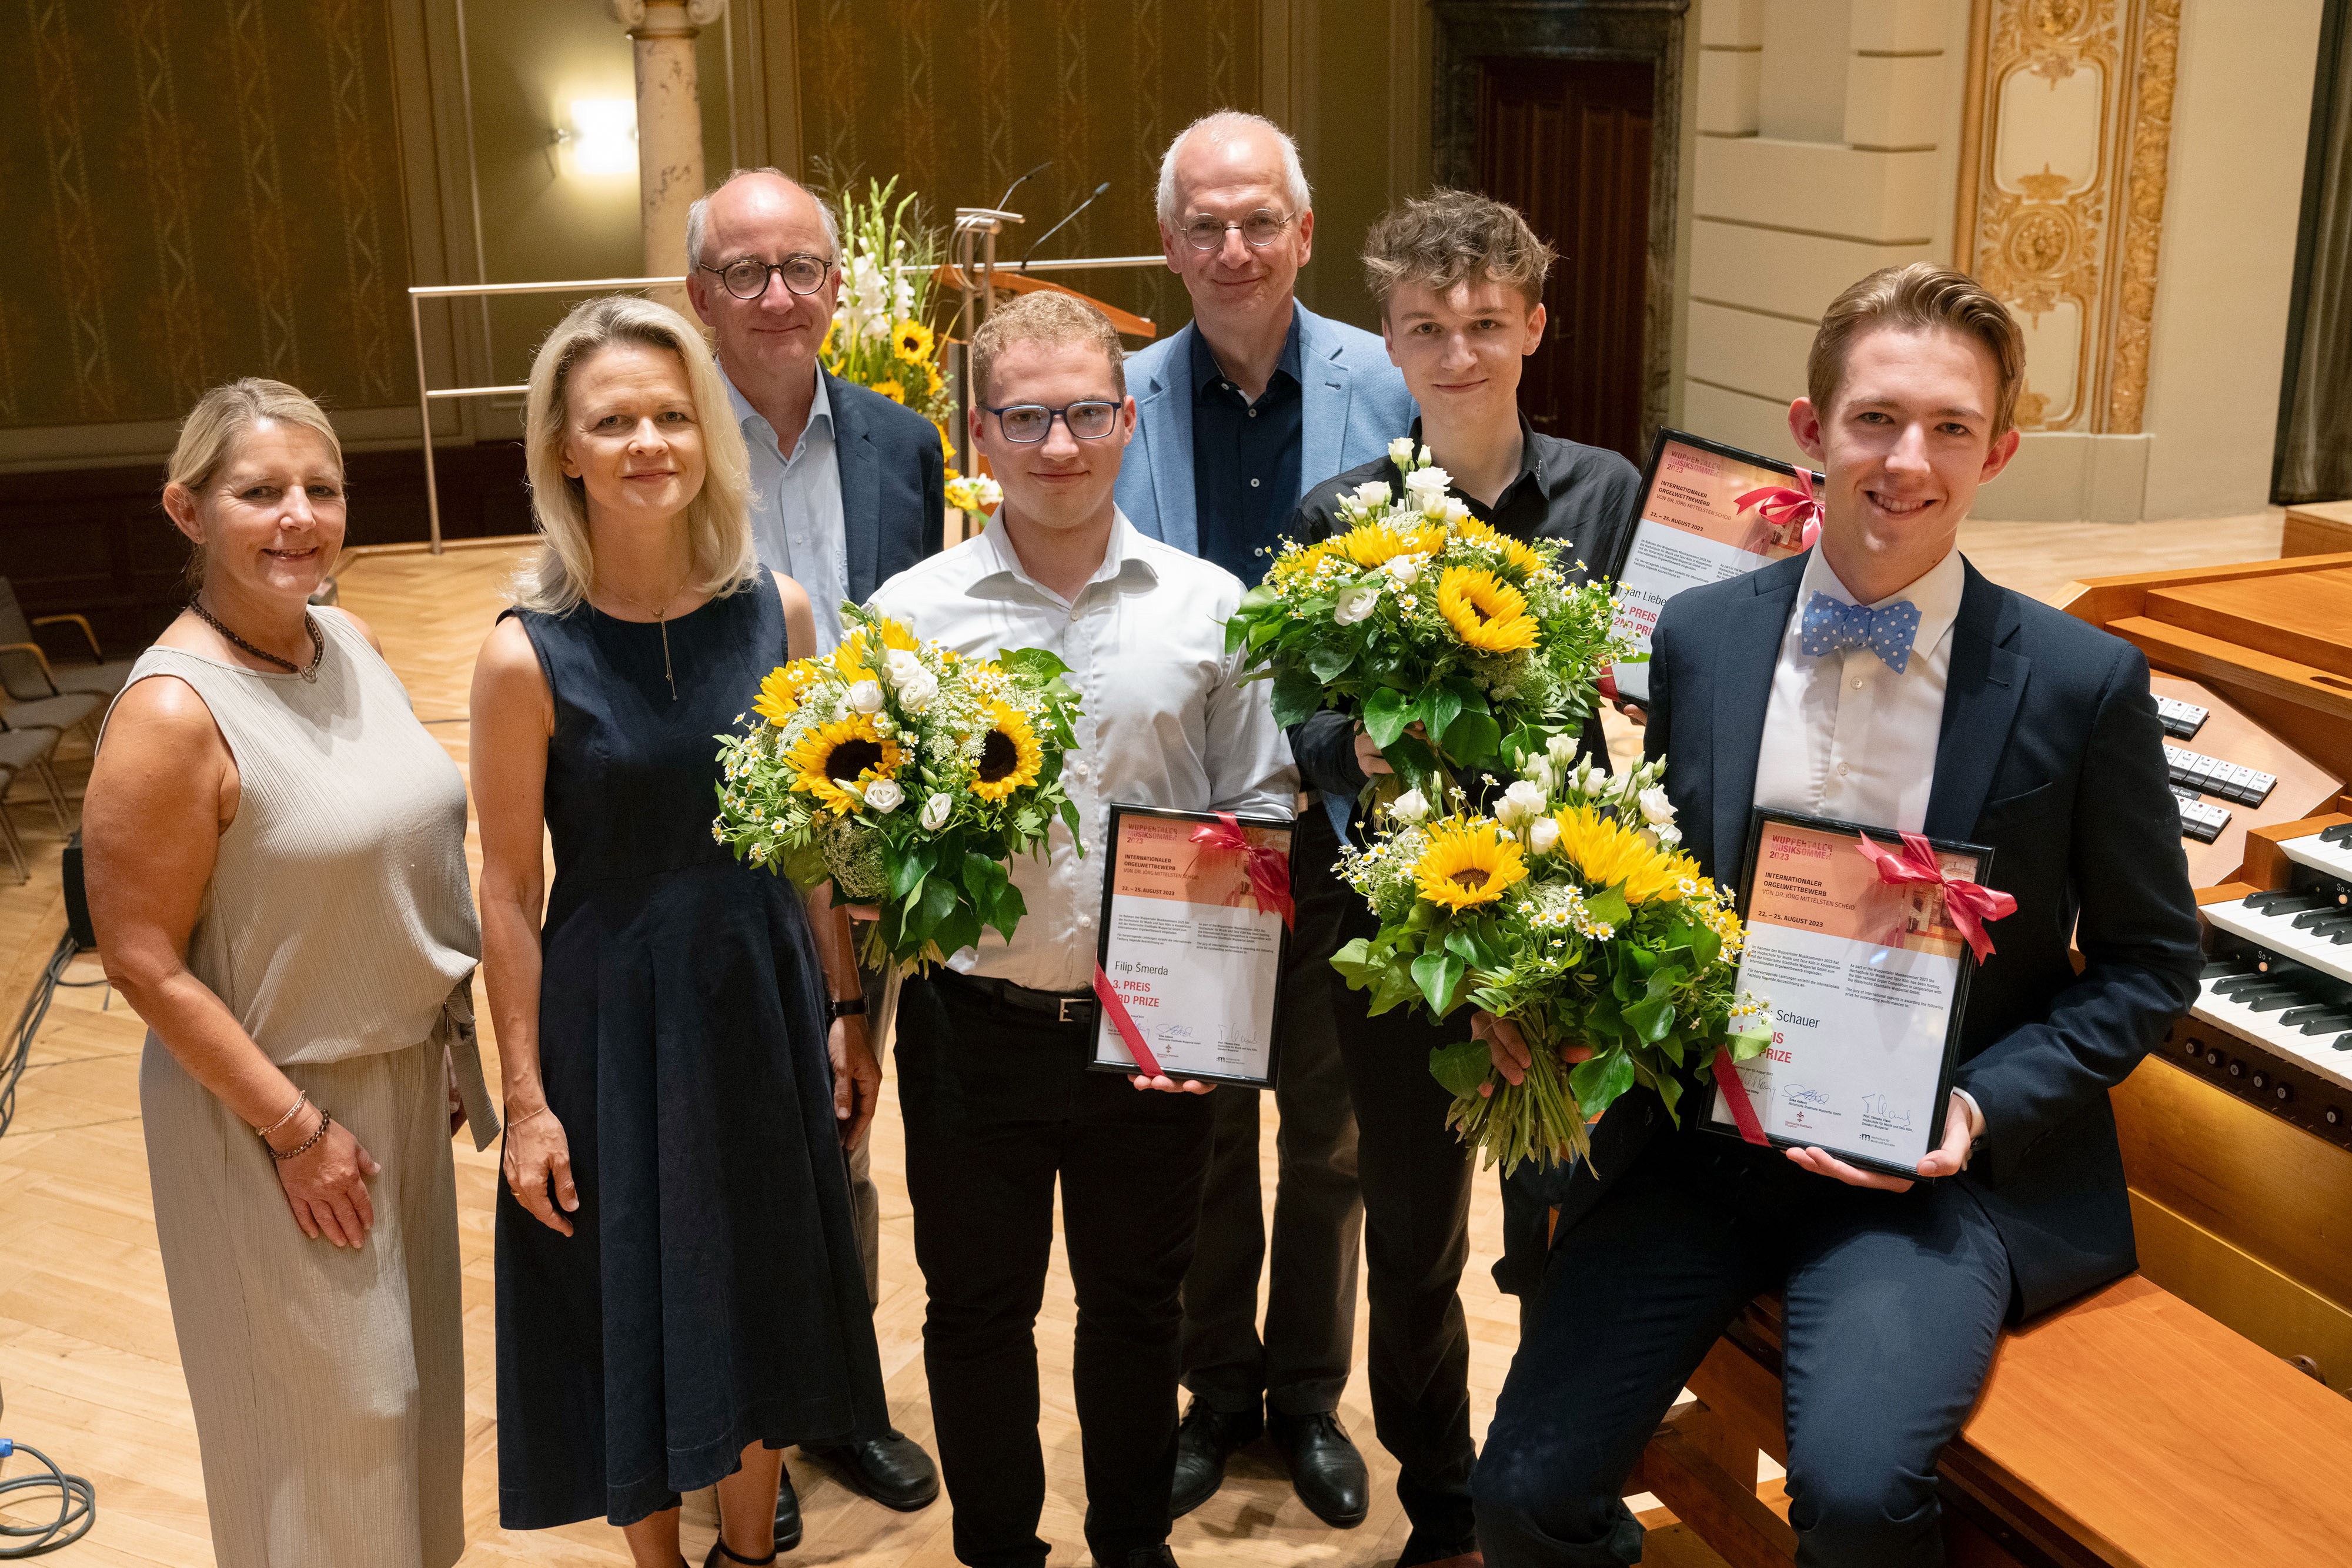 Internationaler Orgelwettbewerb Wuppertal - Prize winners